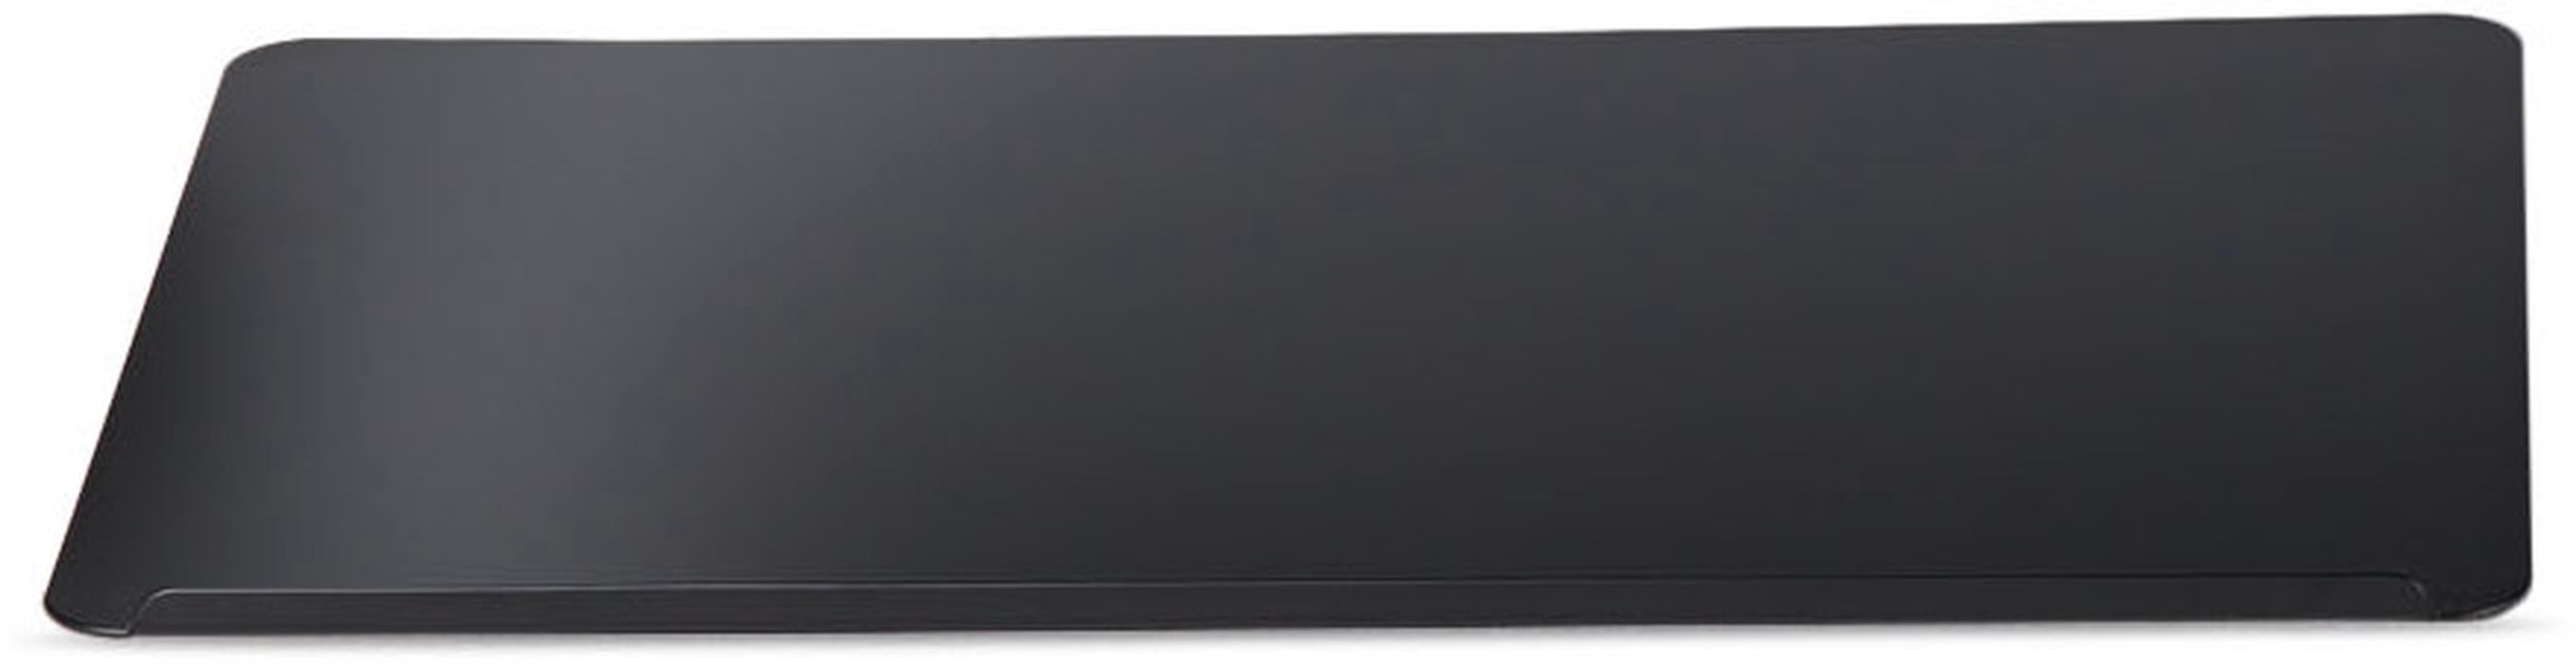 New Tendency Black Bureau Laptop Stand